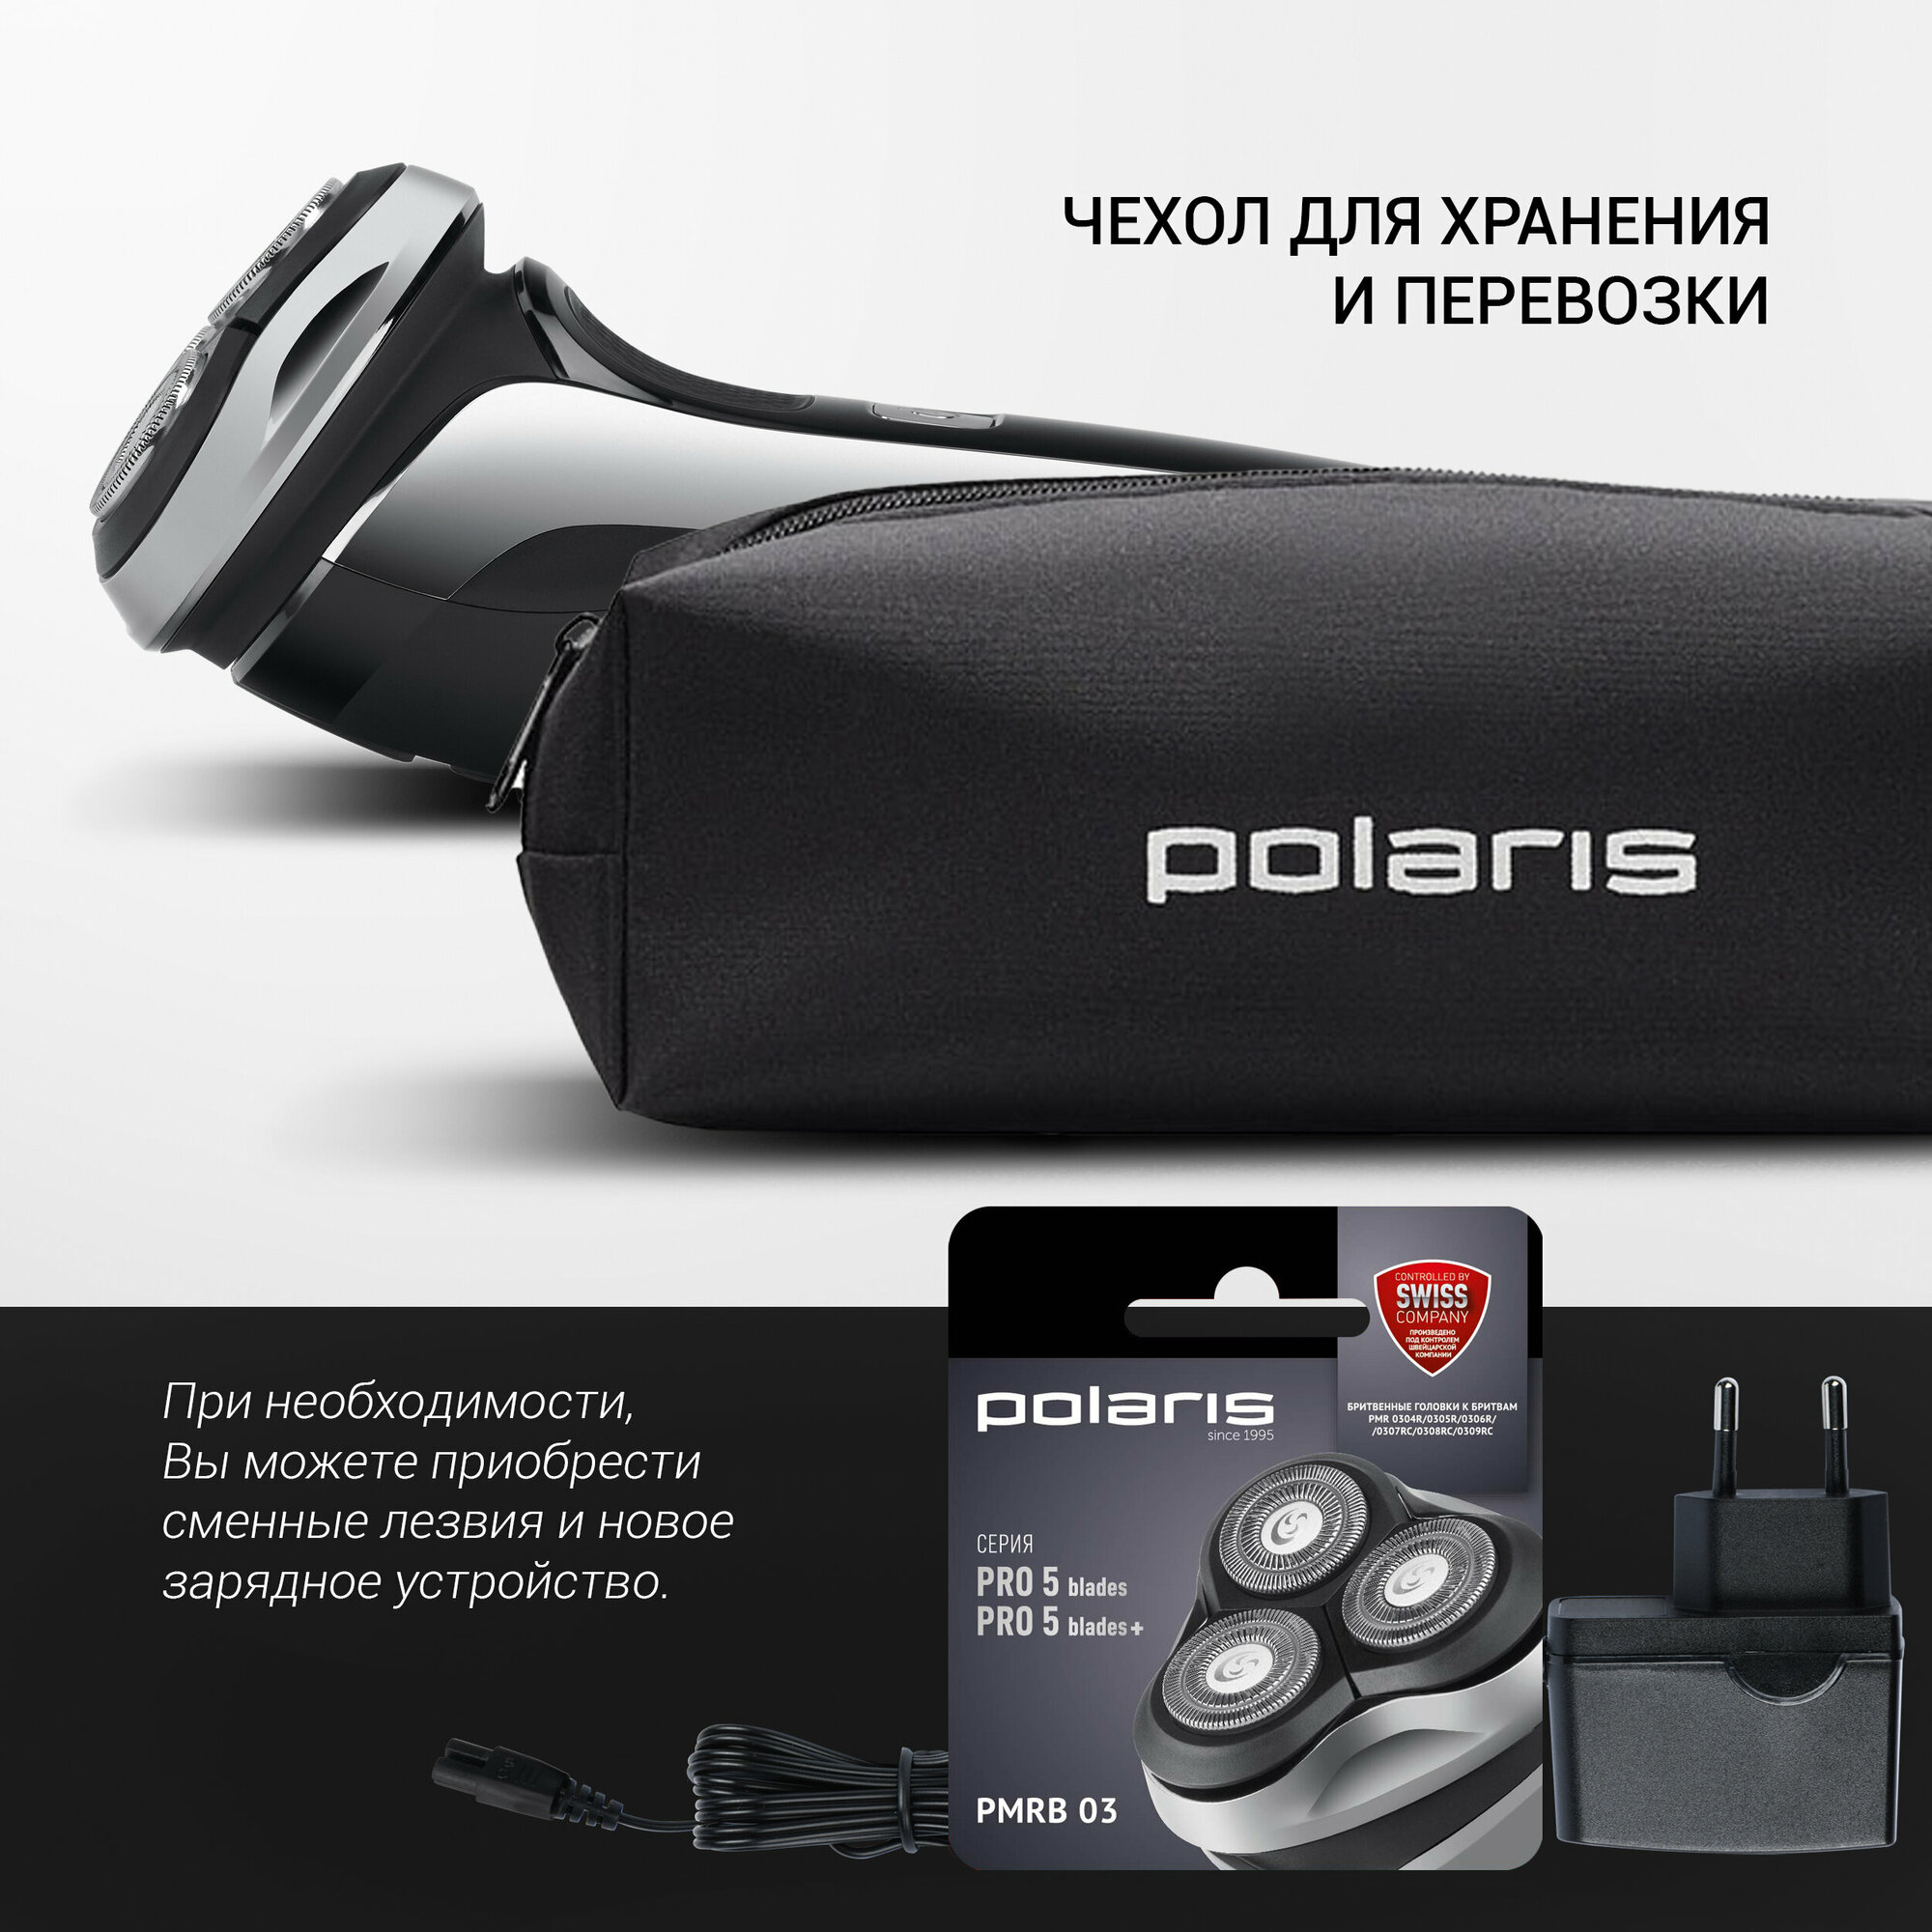 Электробритва Polaris PMR 0305R wet&dry PRO 5 blades